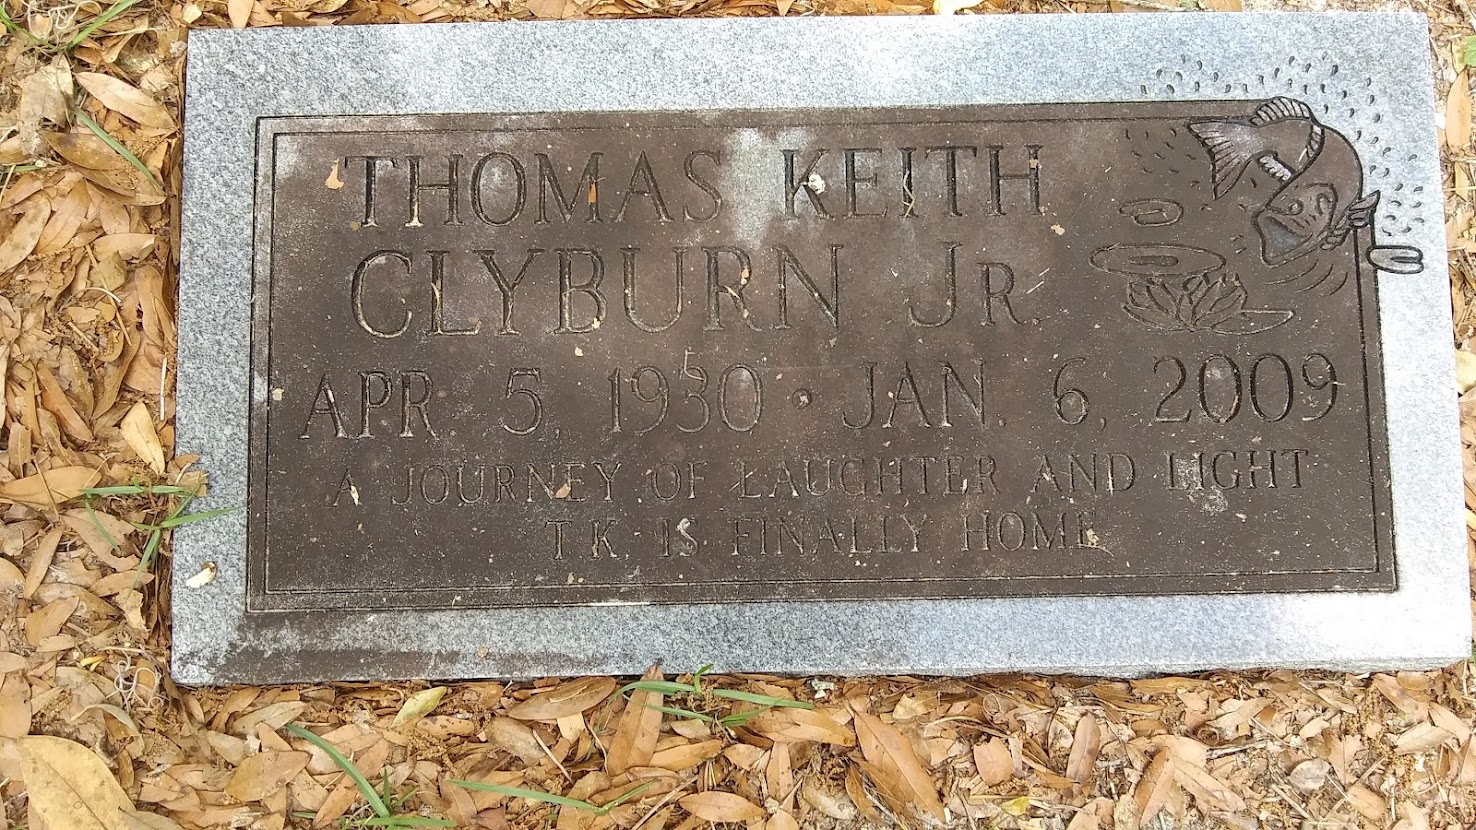 Headstone for Clyburn, Thomas Keith Jr